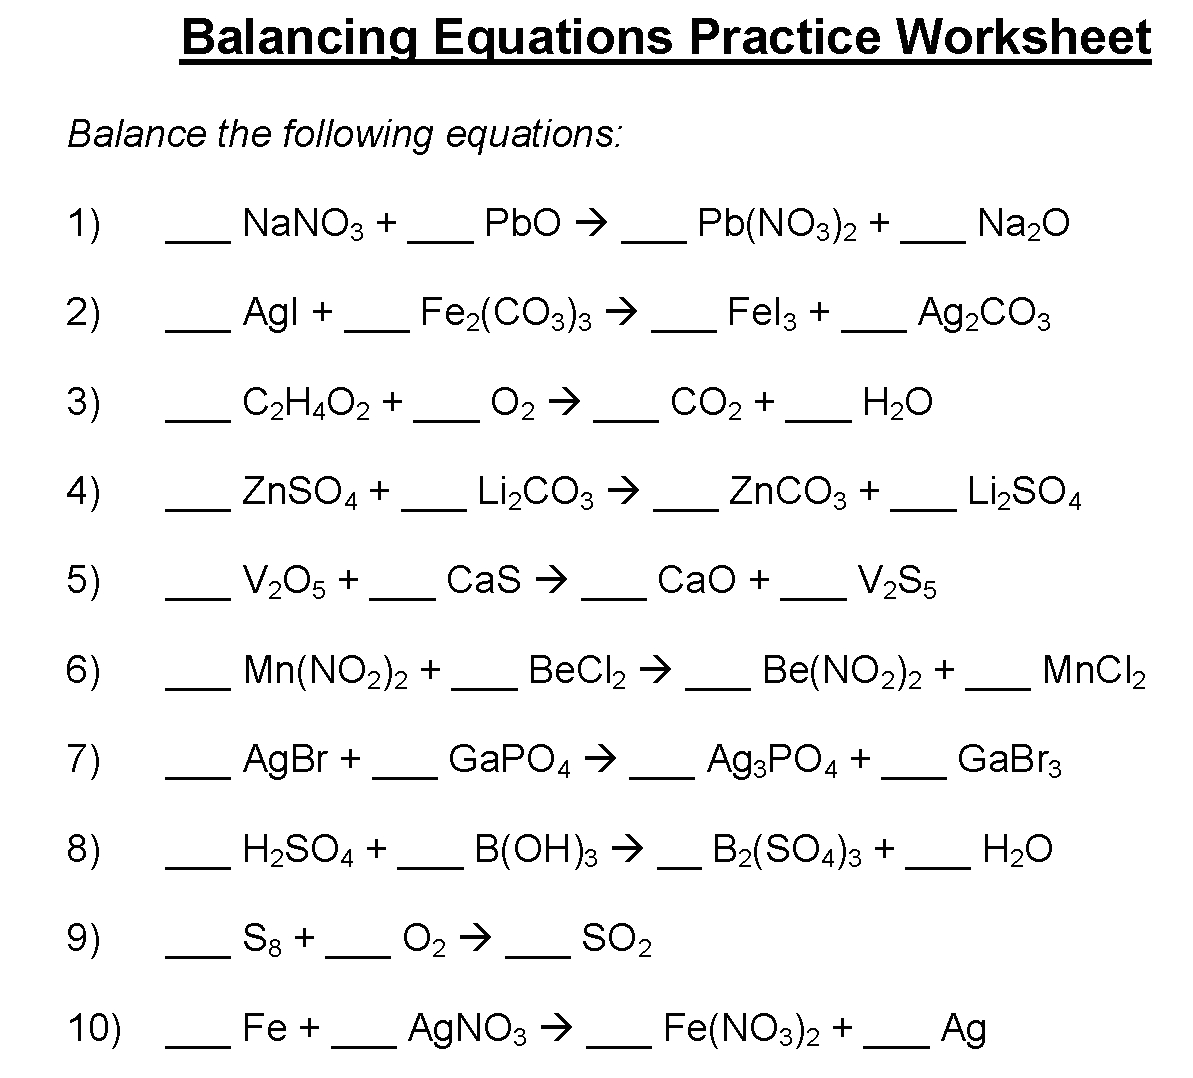 Worksheet Balancing Equations Practice Worksheet Balancing Or Balancing Equations Practice Worksheet